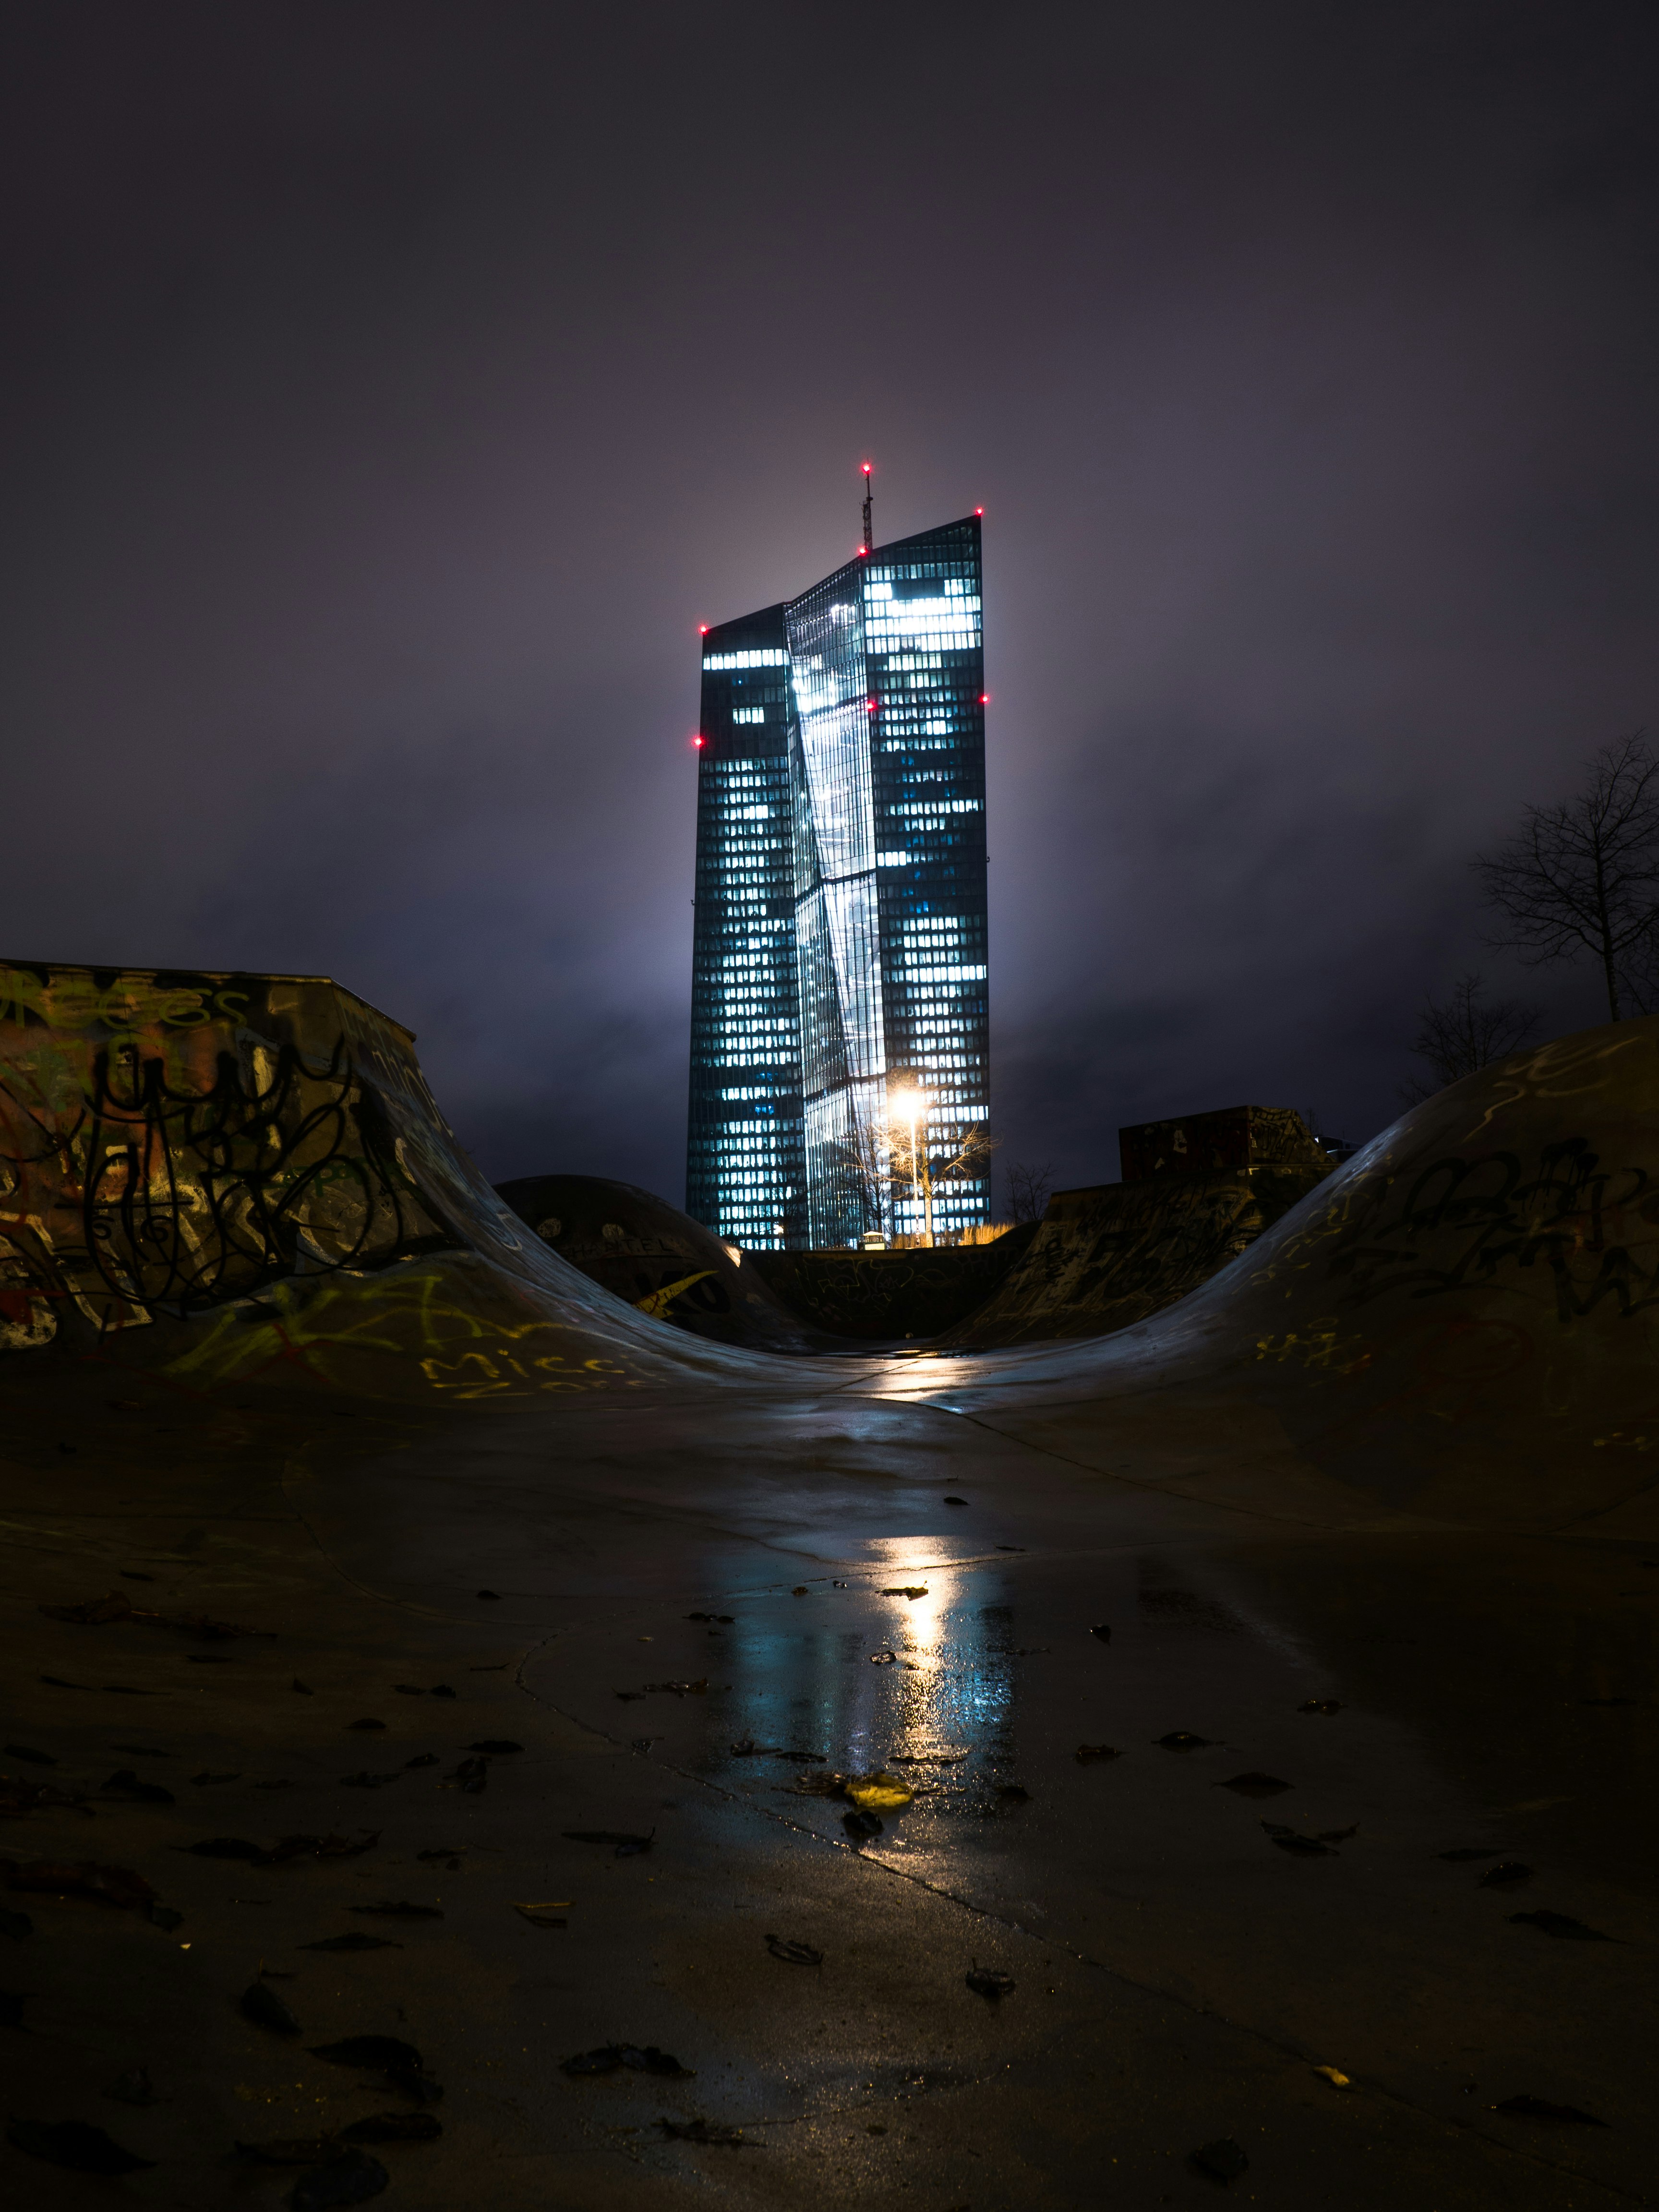 European Central Bank (ECB) headquarters in Frankfurt at night. 